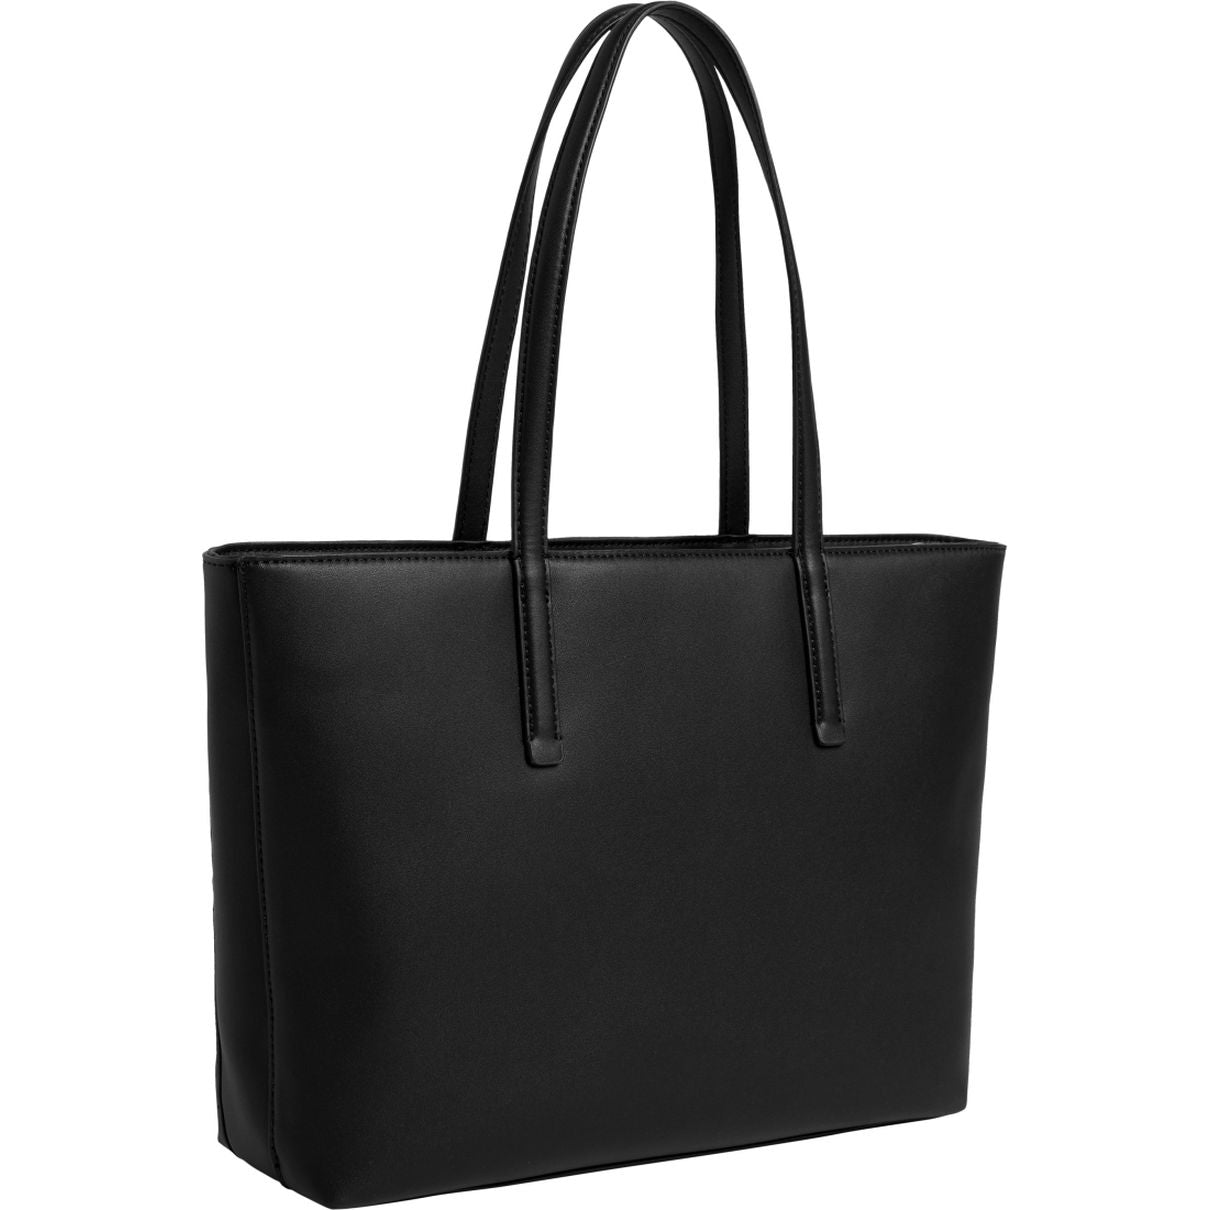 CALVIN KLEIN moteriškas juodas krepšys Must shopper